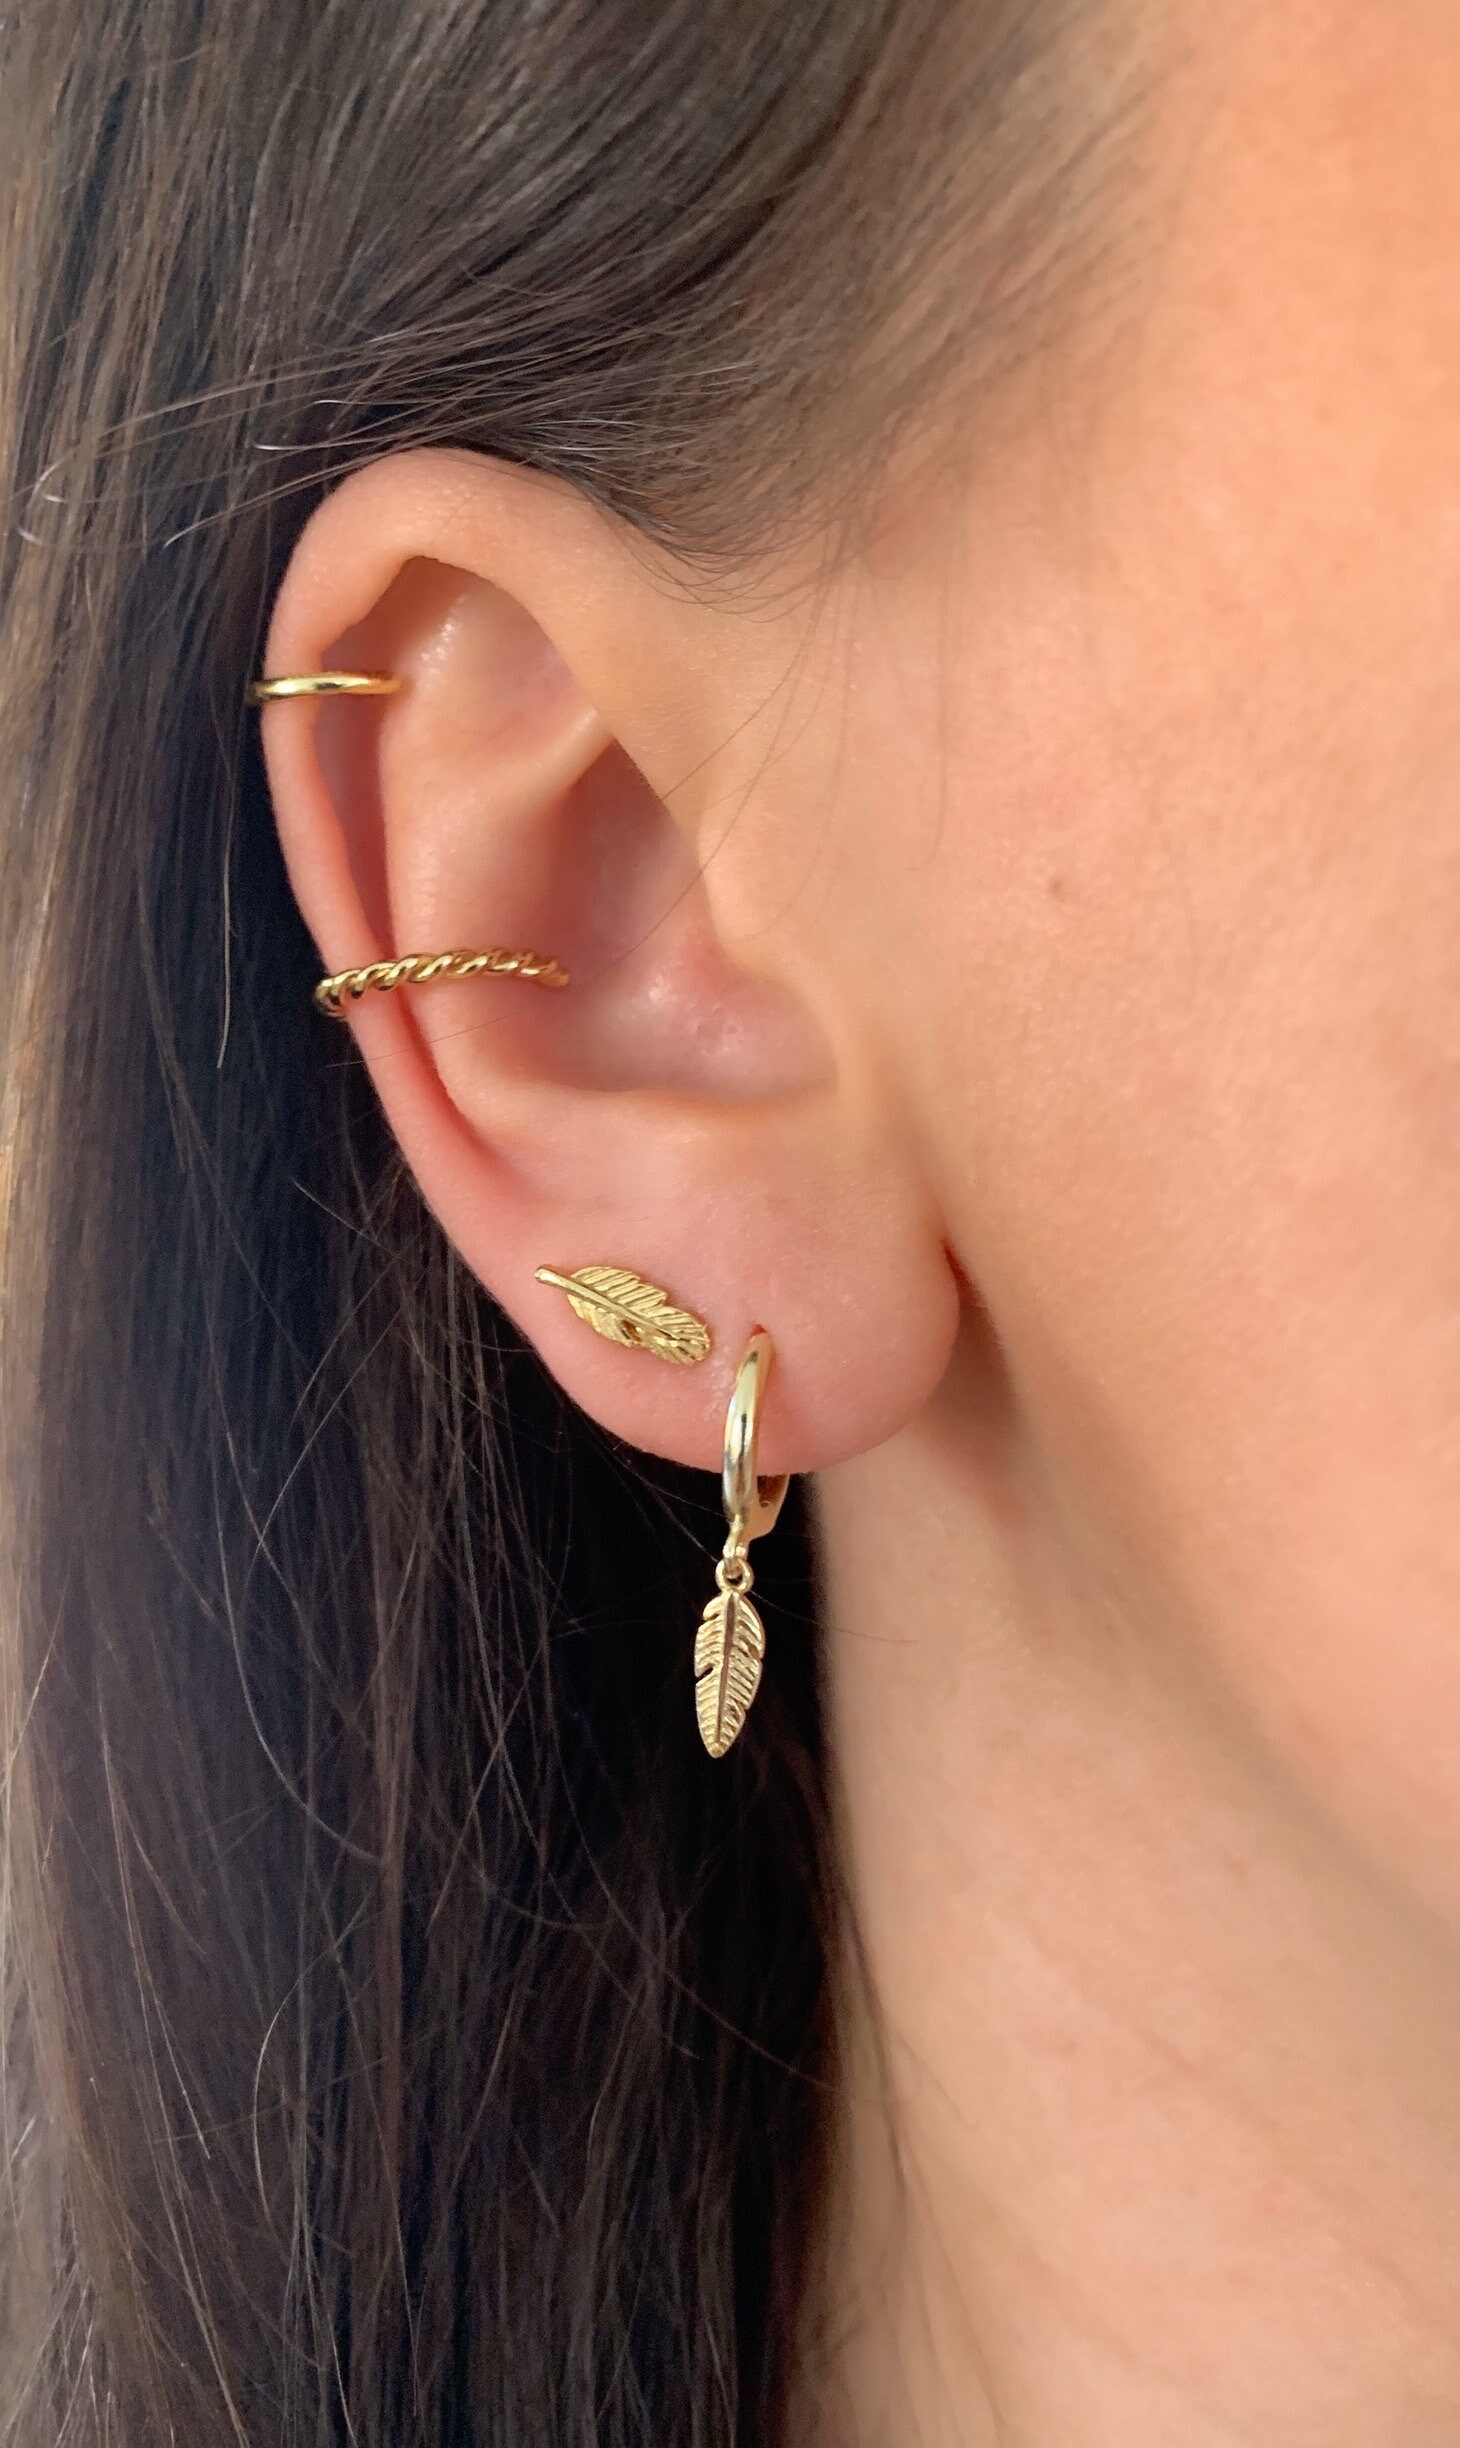 Feather Gold Gold Ear Dainty Ear Studs Ear - Delicate Studs Tiny Feather Feather Etsy Gold Jewelry Feather Ear Minimalist Studs Studs